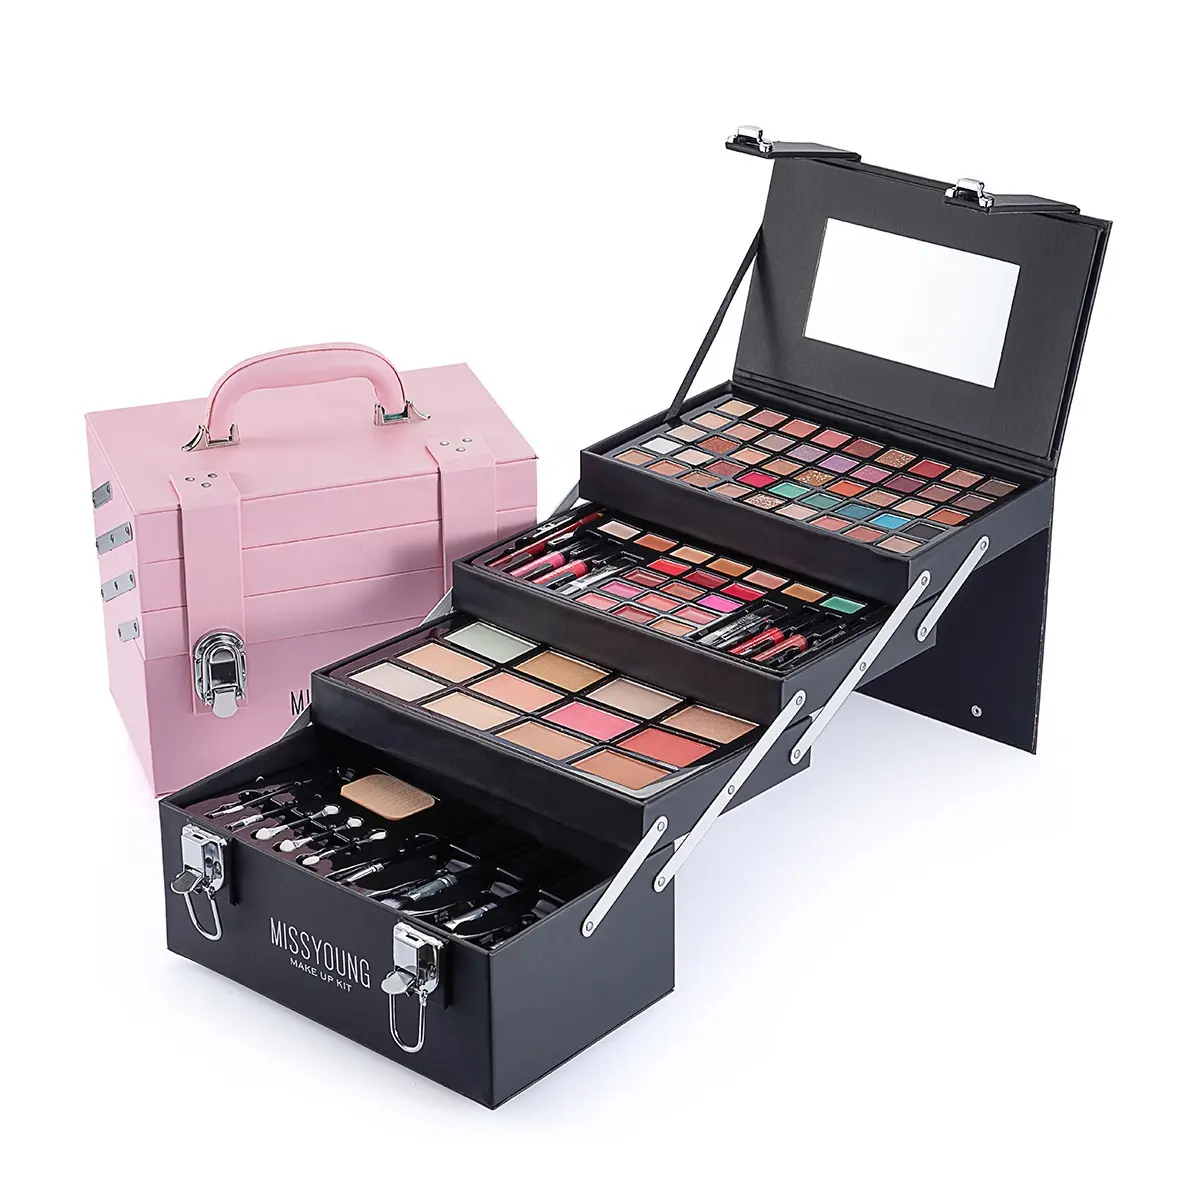 Missyoung Christmas Gift Professional Makeup Kit Eyeshadow Palette Lipstick Powder Blusher Brushes Make Up Set